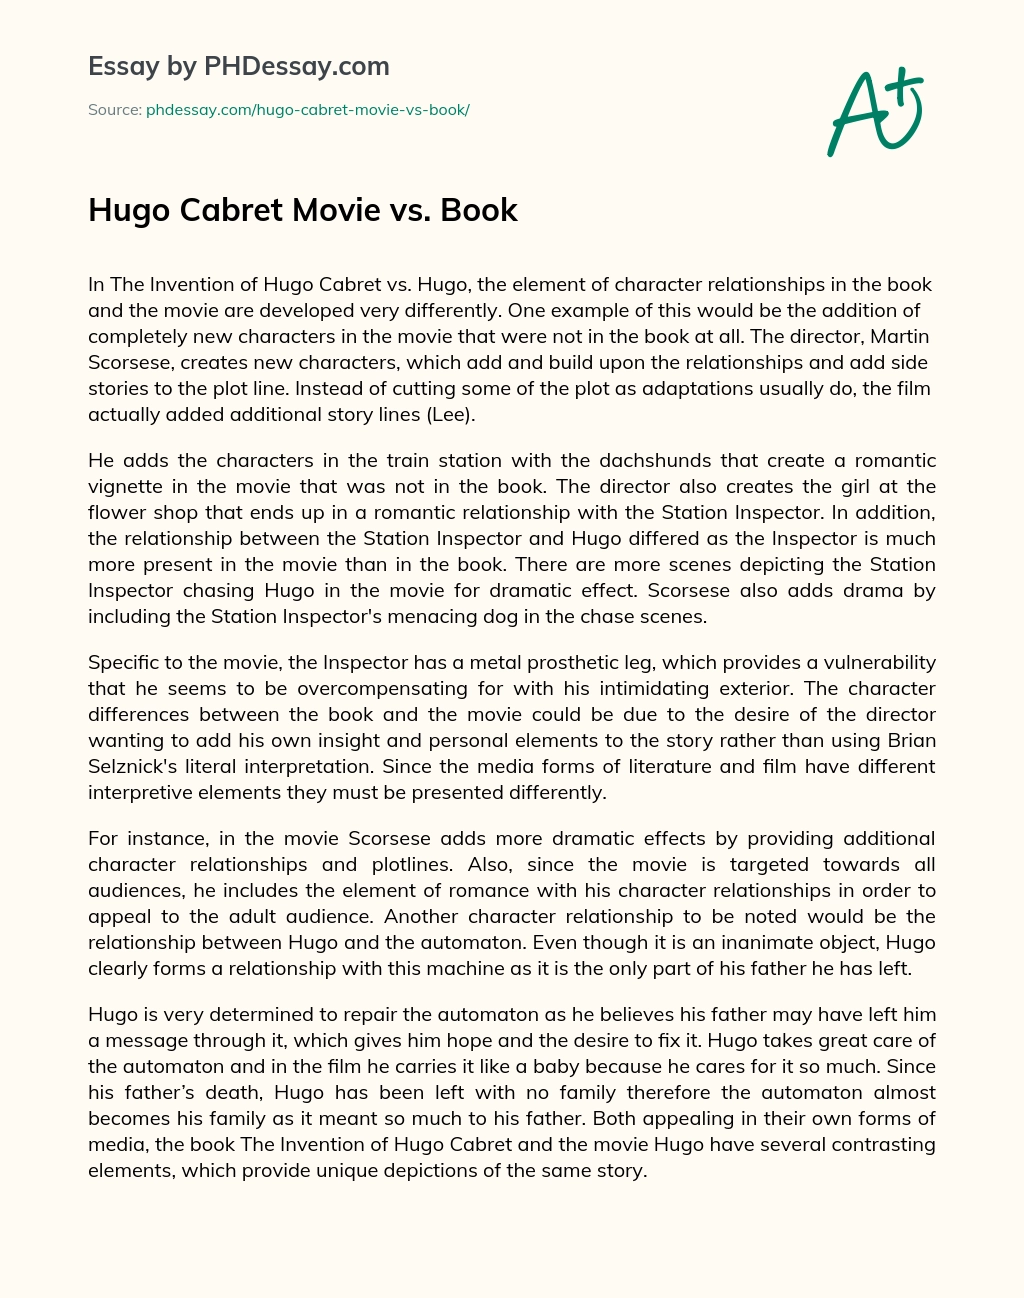 Hugo Cabret Movie vs. Book essay